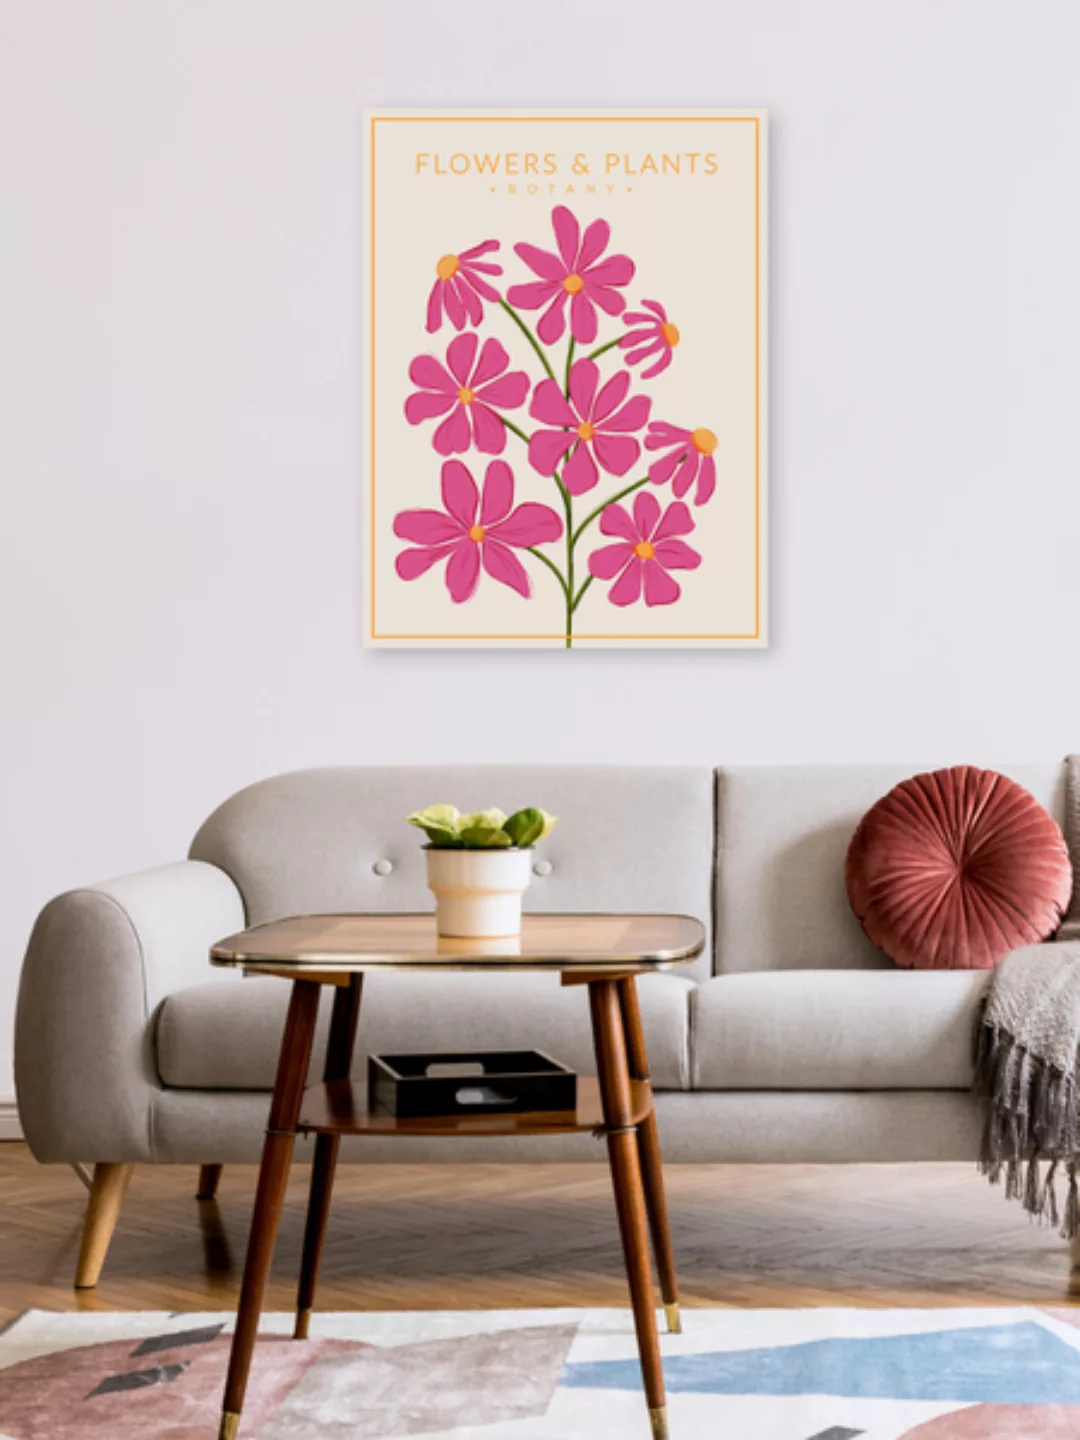 Poster / Leinwandbild - Hot Pink Flowers - Botany No1 günstig online kaufen